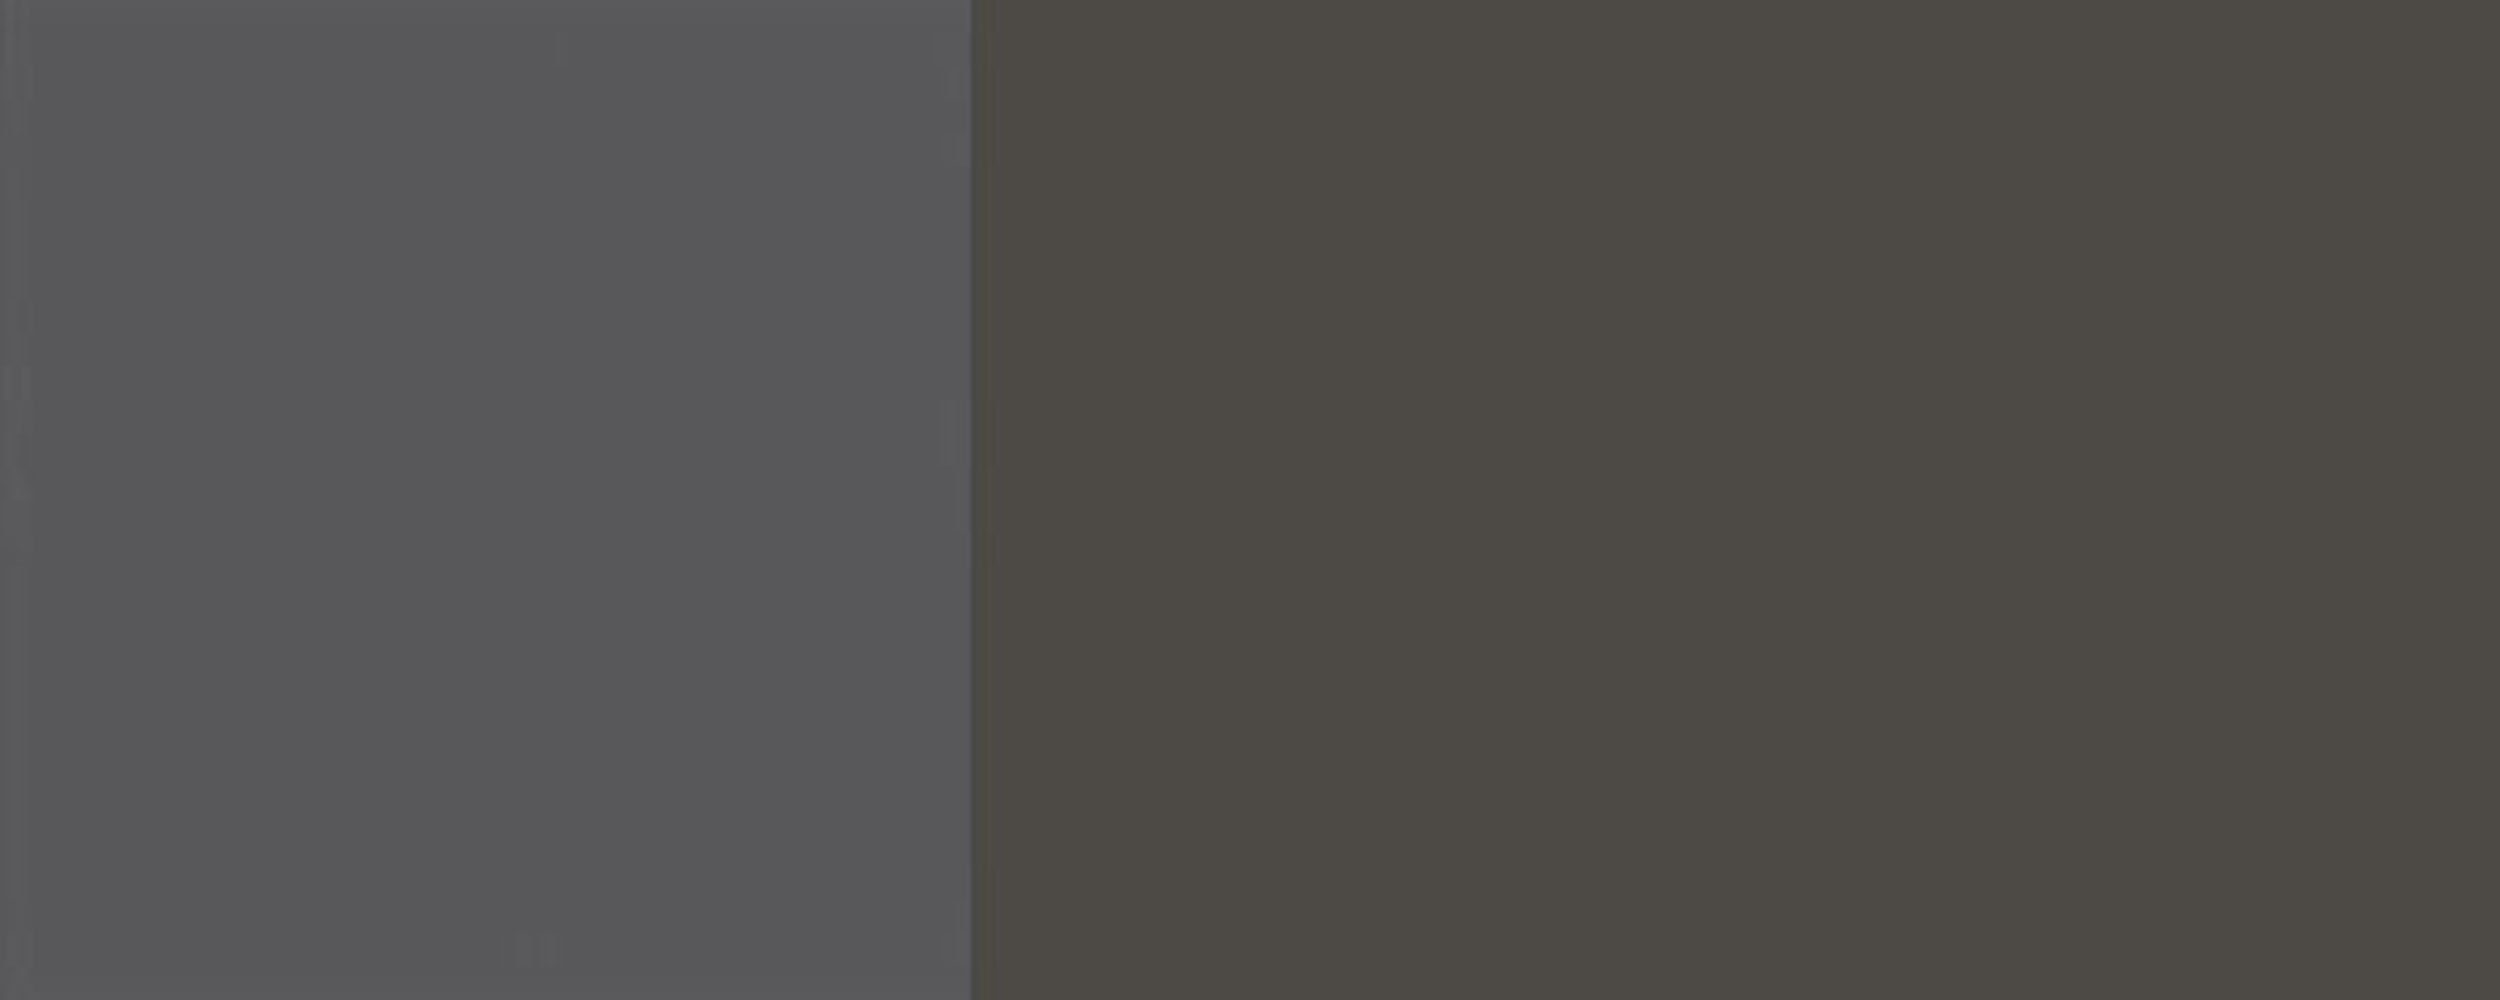 Feldmann-Wohnen Sockelblende Tivoli, 45cm Front- RAL teilintegriert matt wählbar 7022 und umbragrau Korpusfarbe